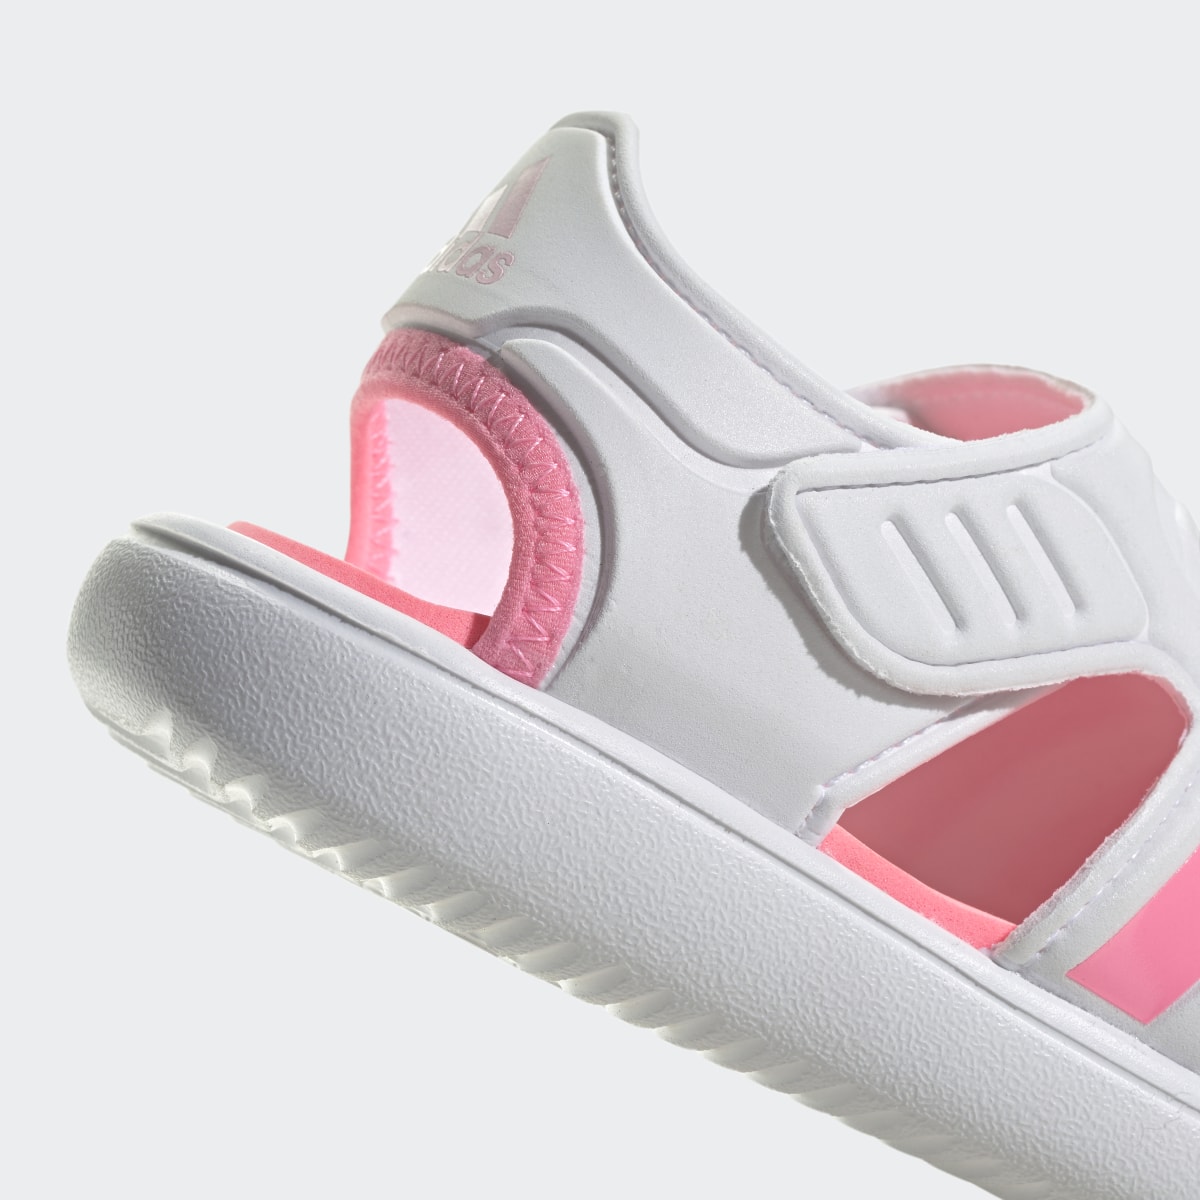 Adidas Summer Closed Toe Water Sandals. 10